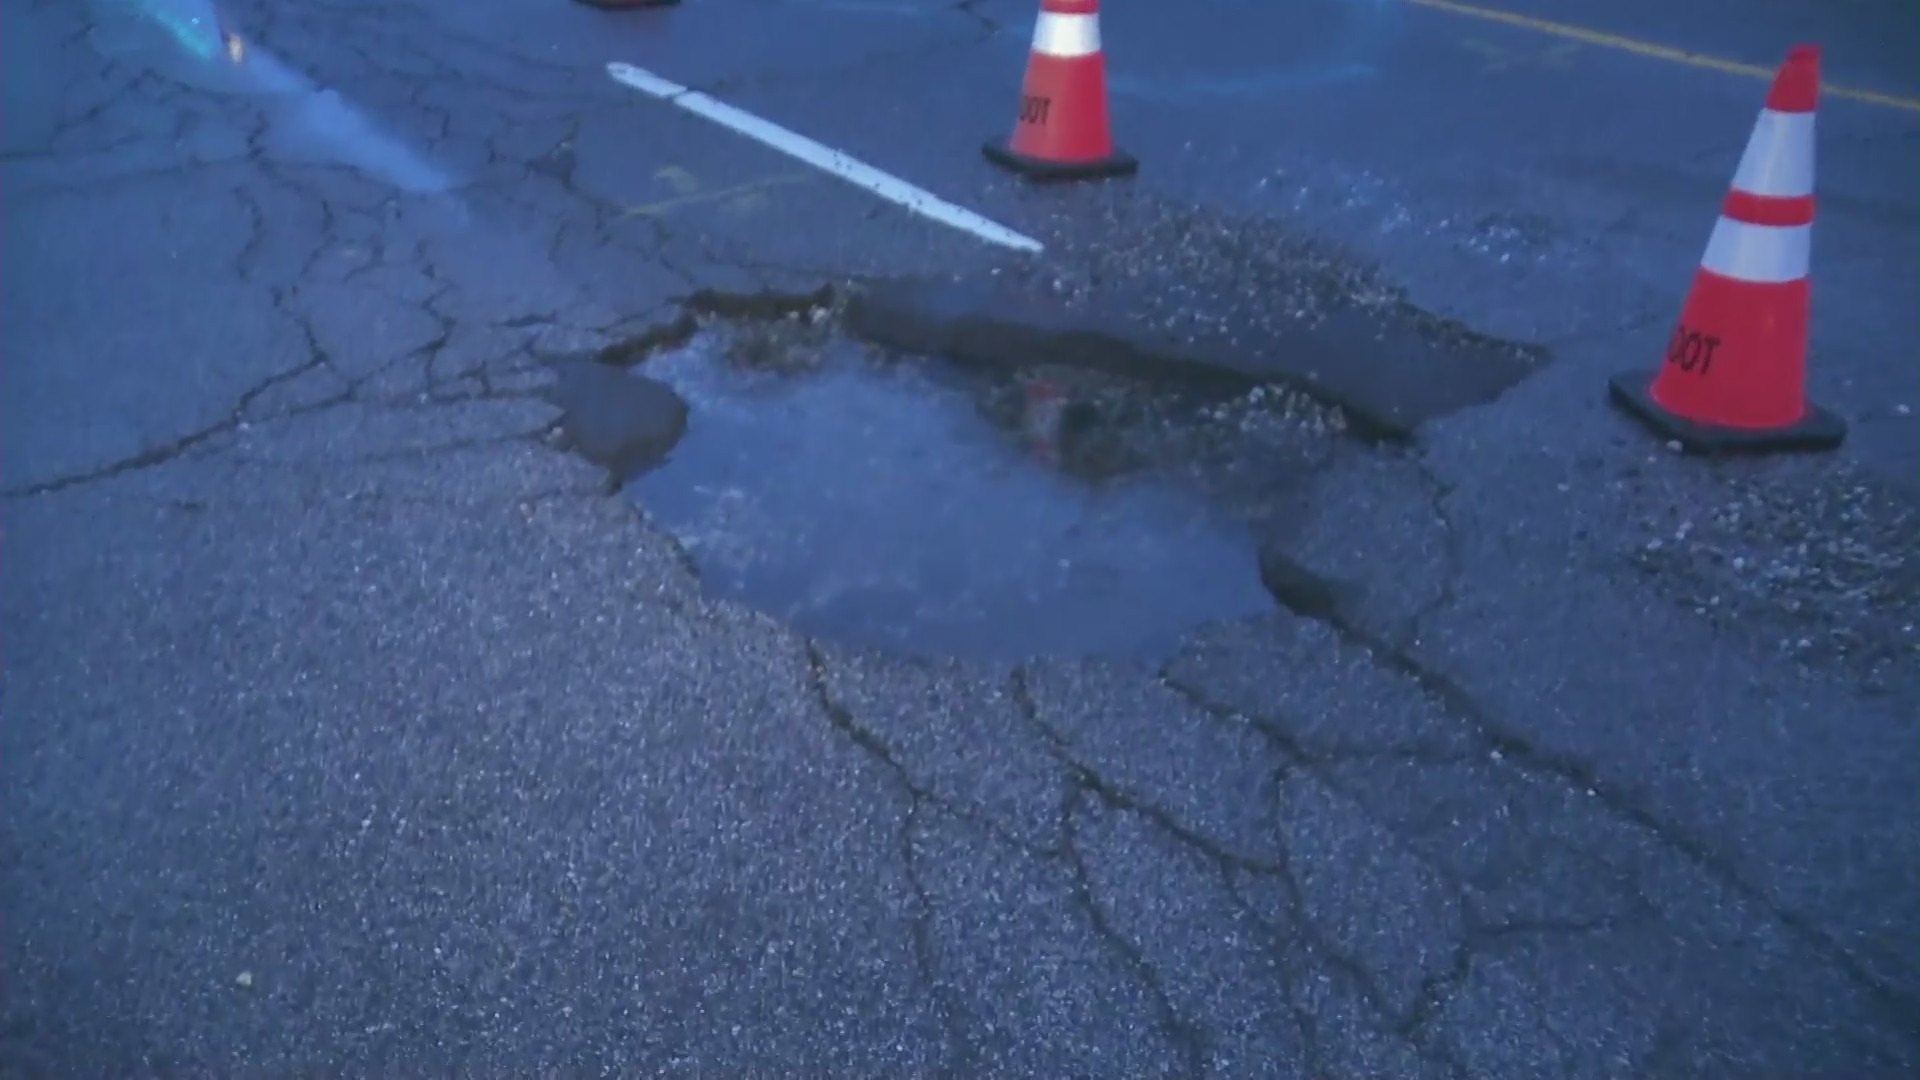 Massive potholes damaging vehicles across Southern California